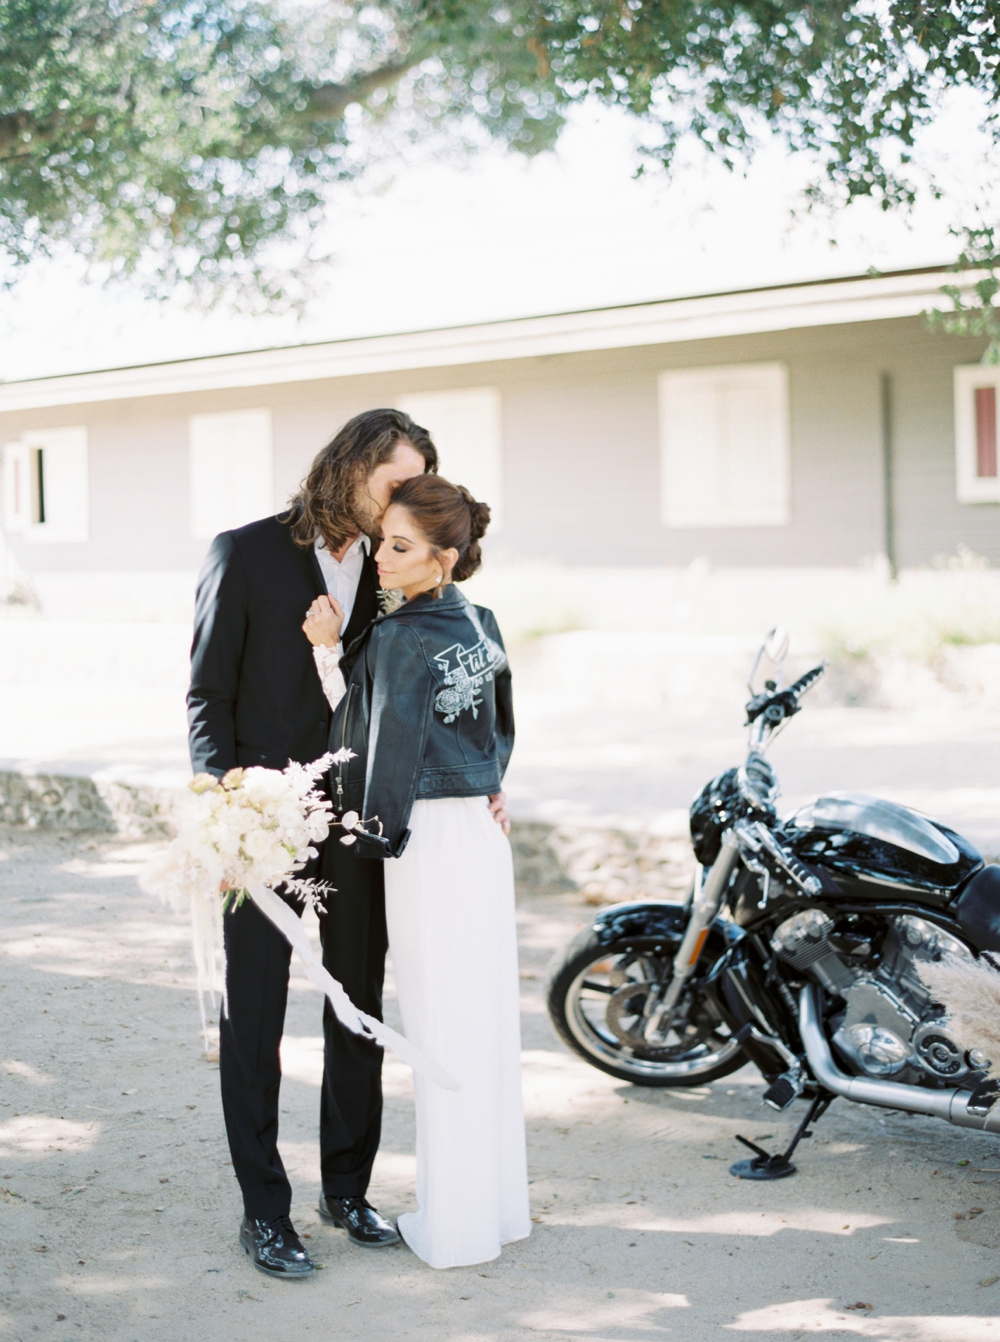 Giracci Vineyards Wedding Editorial - Orange County Photographer